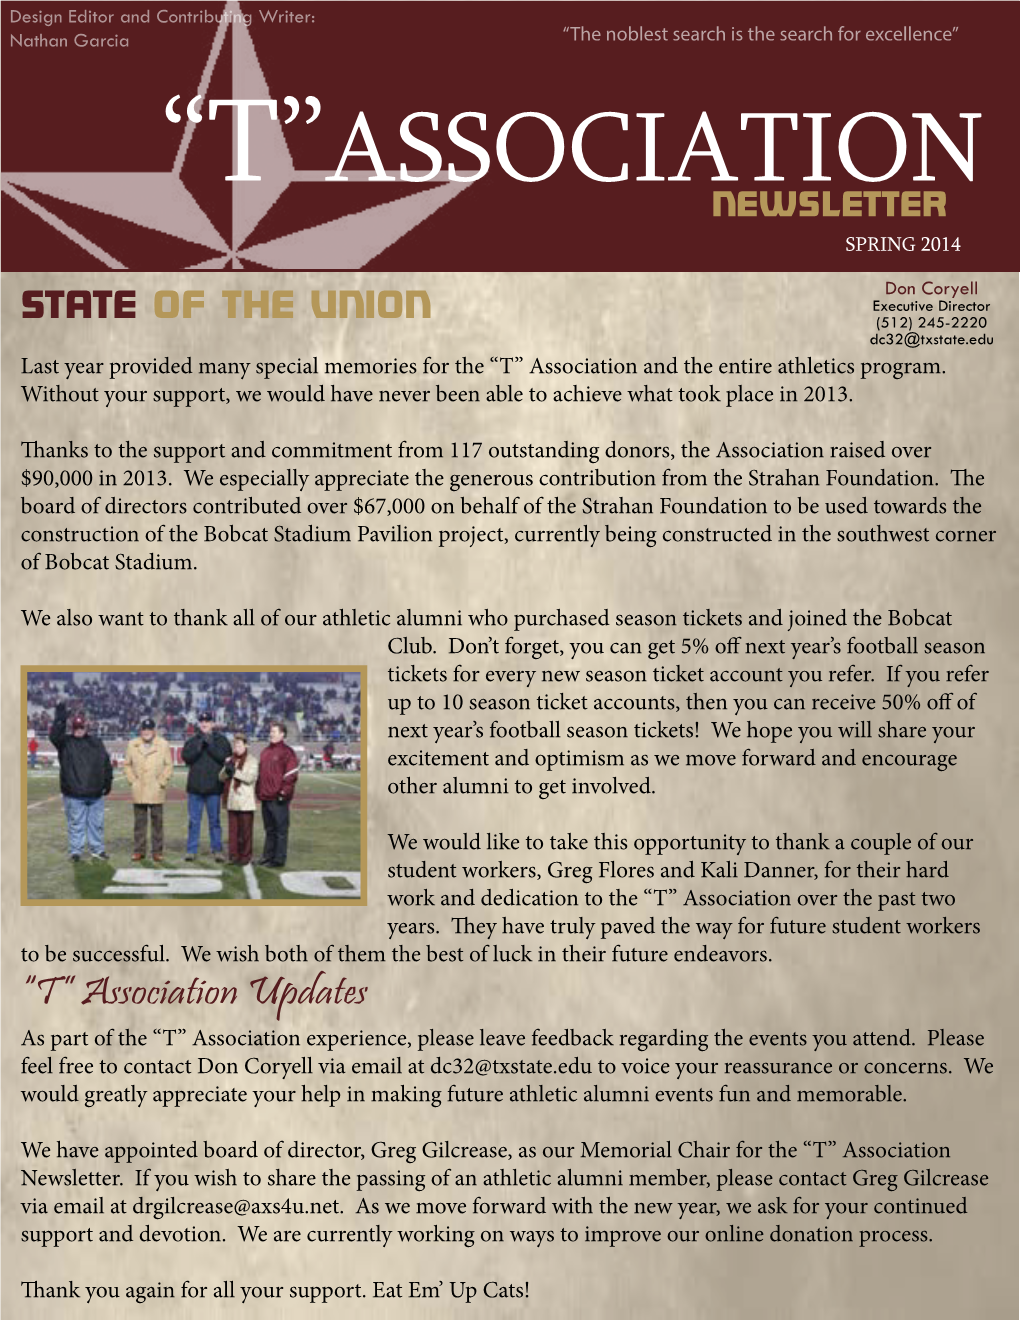 “T”Association Newsletter Spring 2014